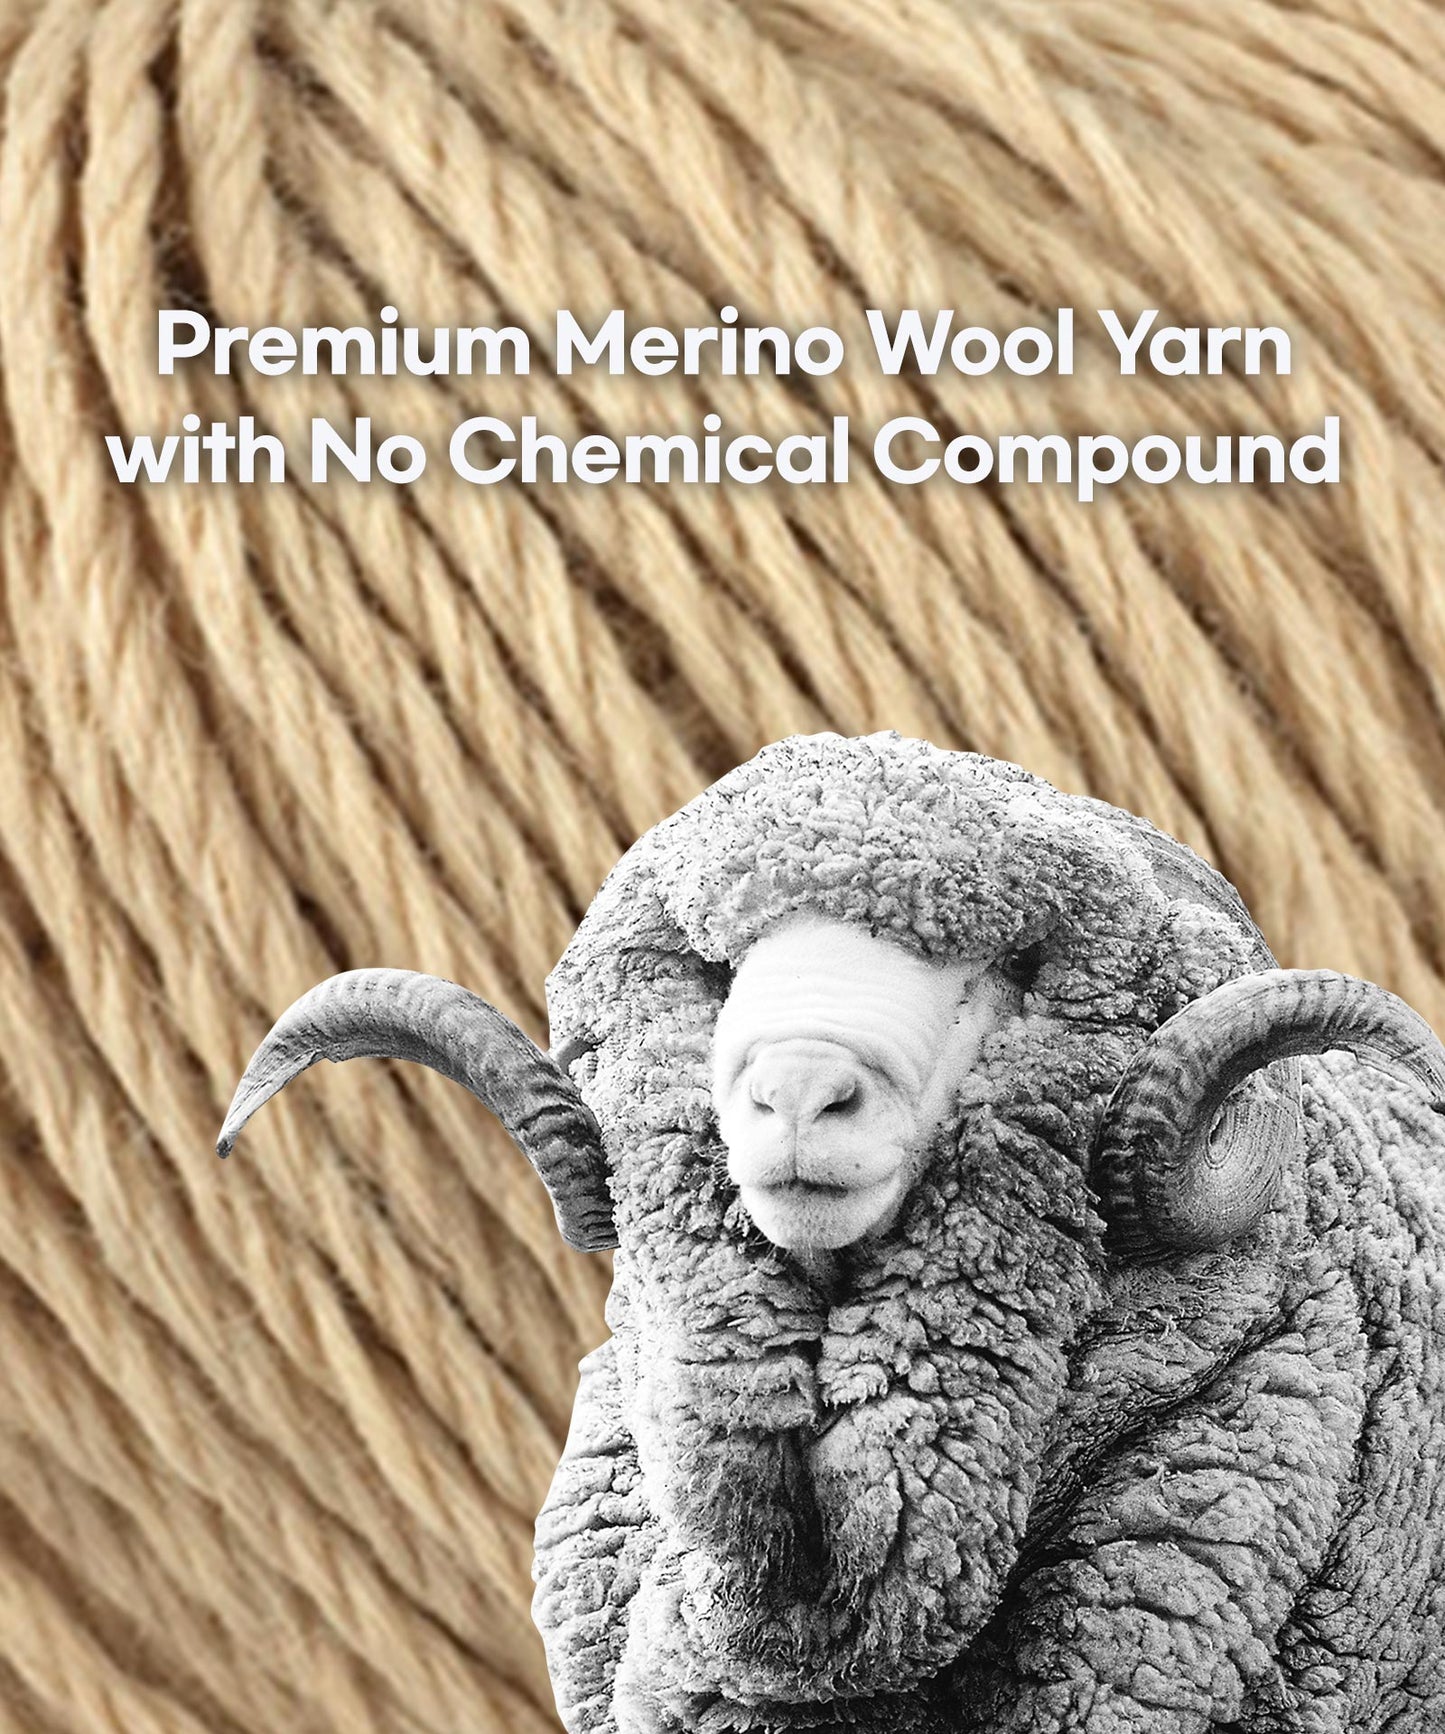 Premium merino wool yarn with no chemical compound.